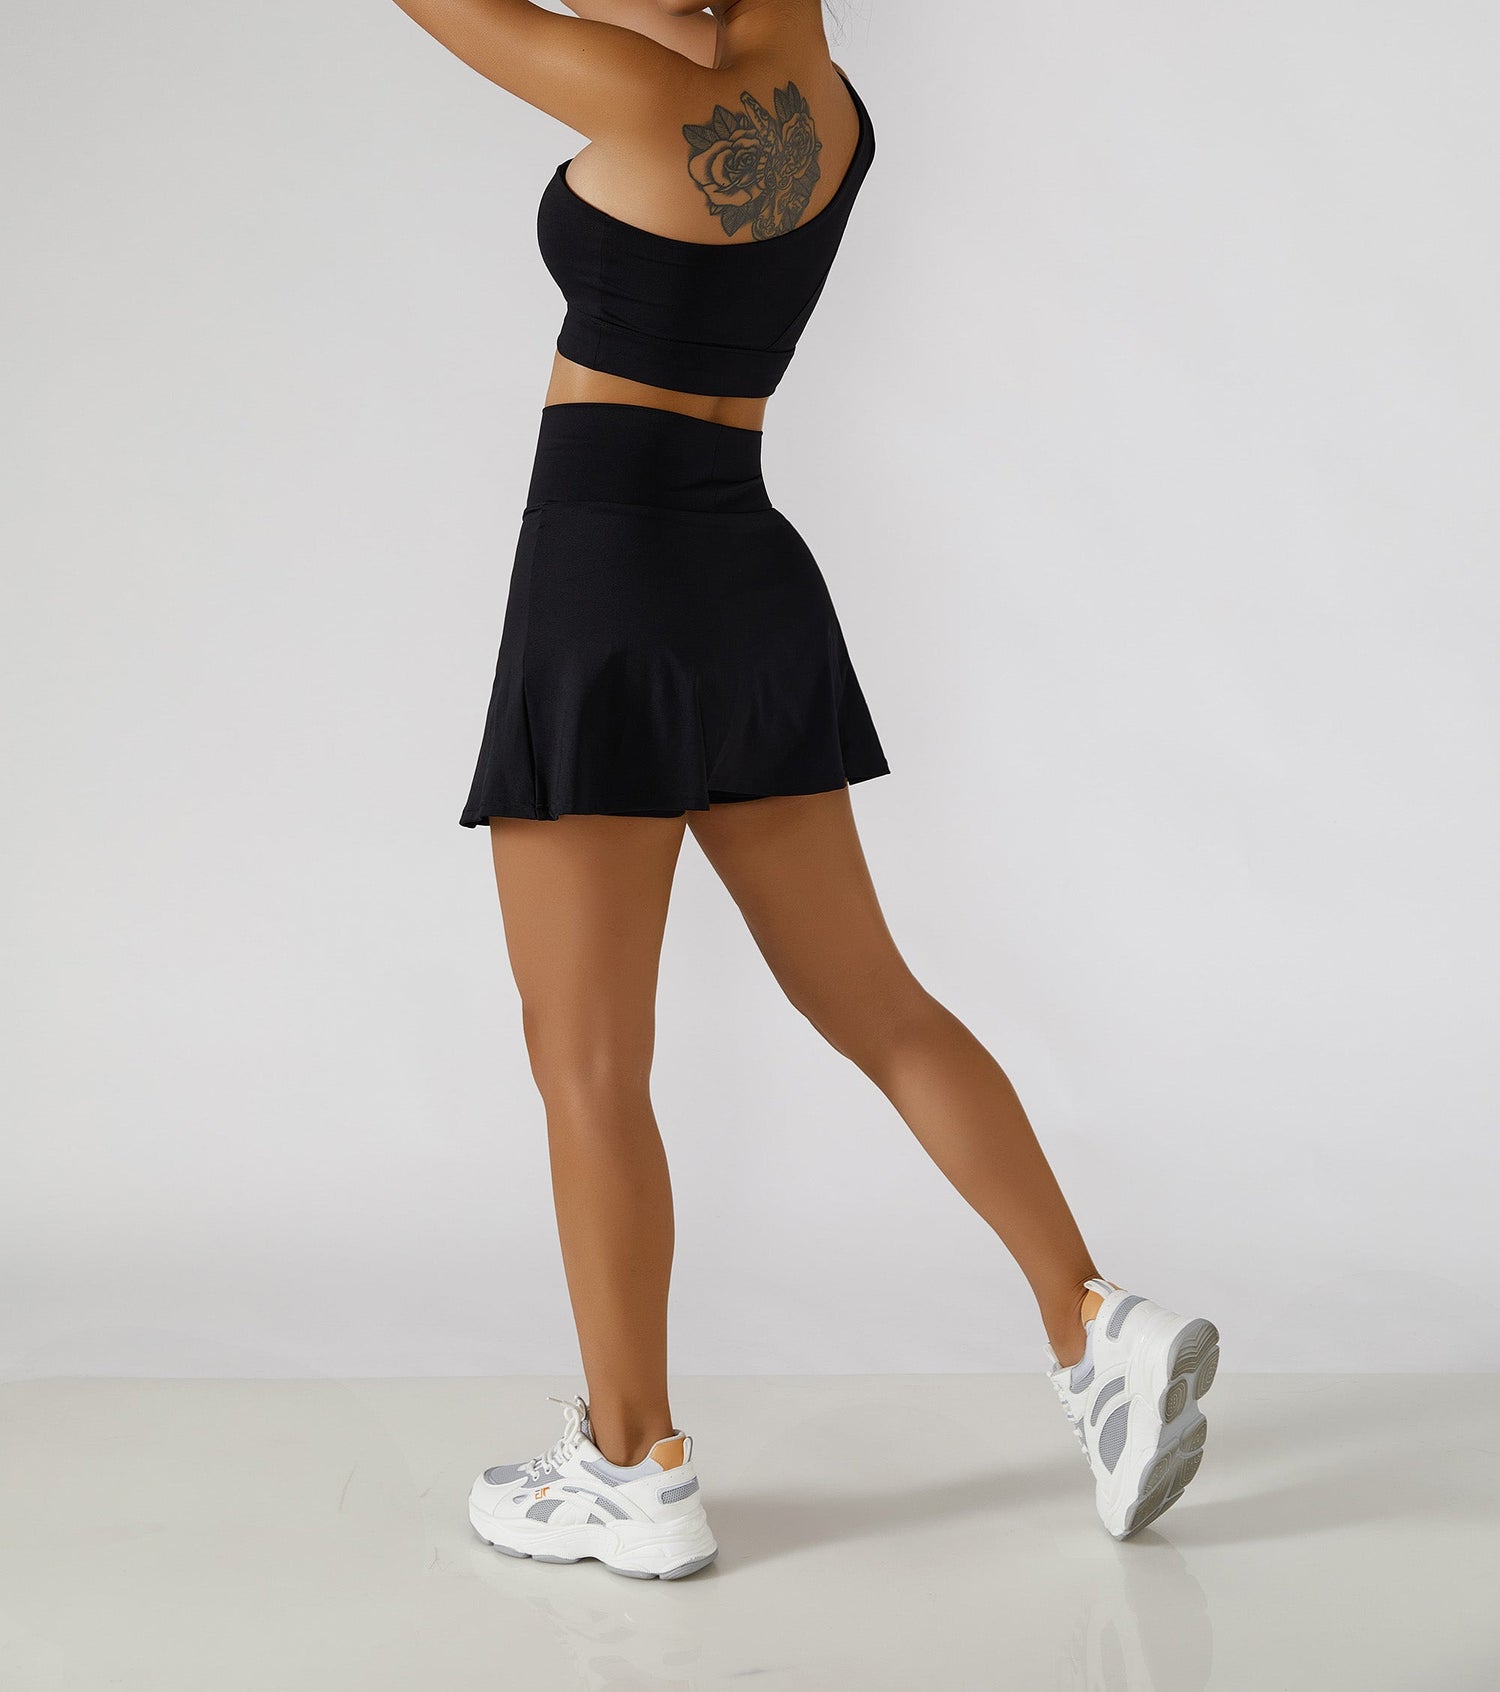 tennis sports bra / tennis skirt, tennis skorts, tennis shorts